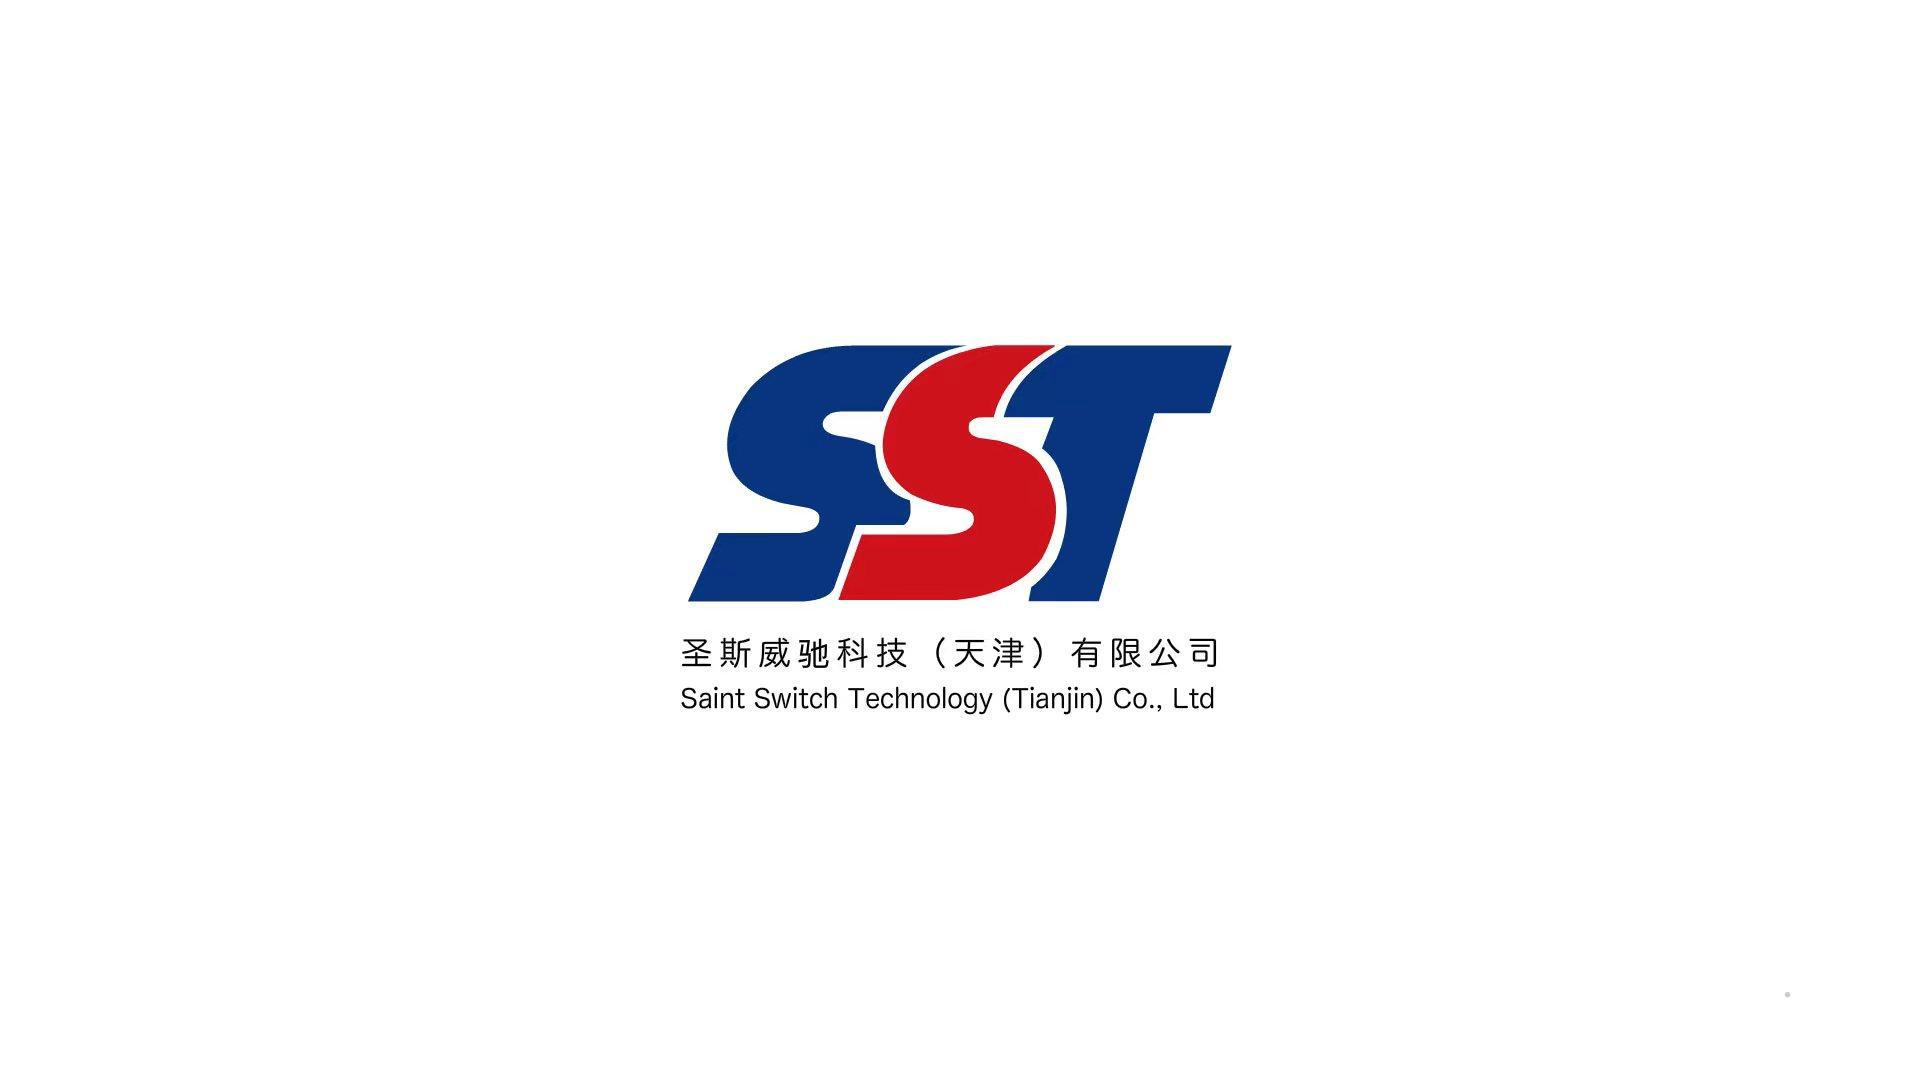 SST 圣斯威驰科技（天津）有限公司 SAINT SWITCH TECHNOLOGY(TIANJIN) CO.，LTDlogo